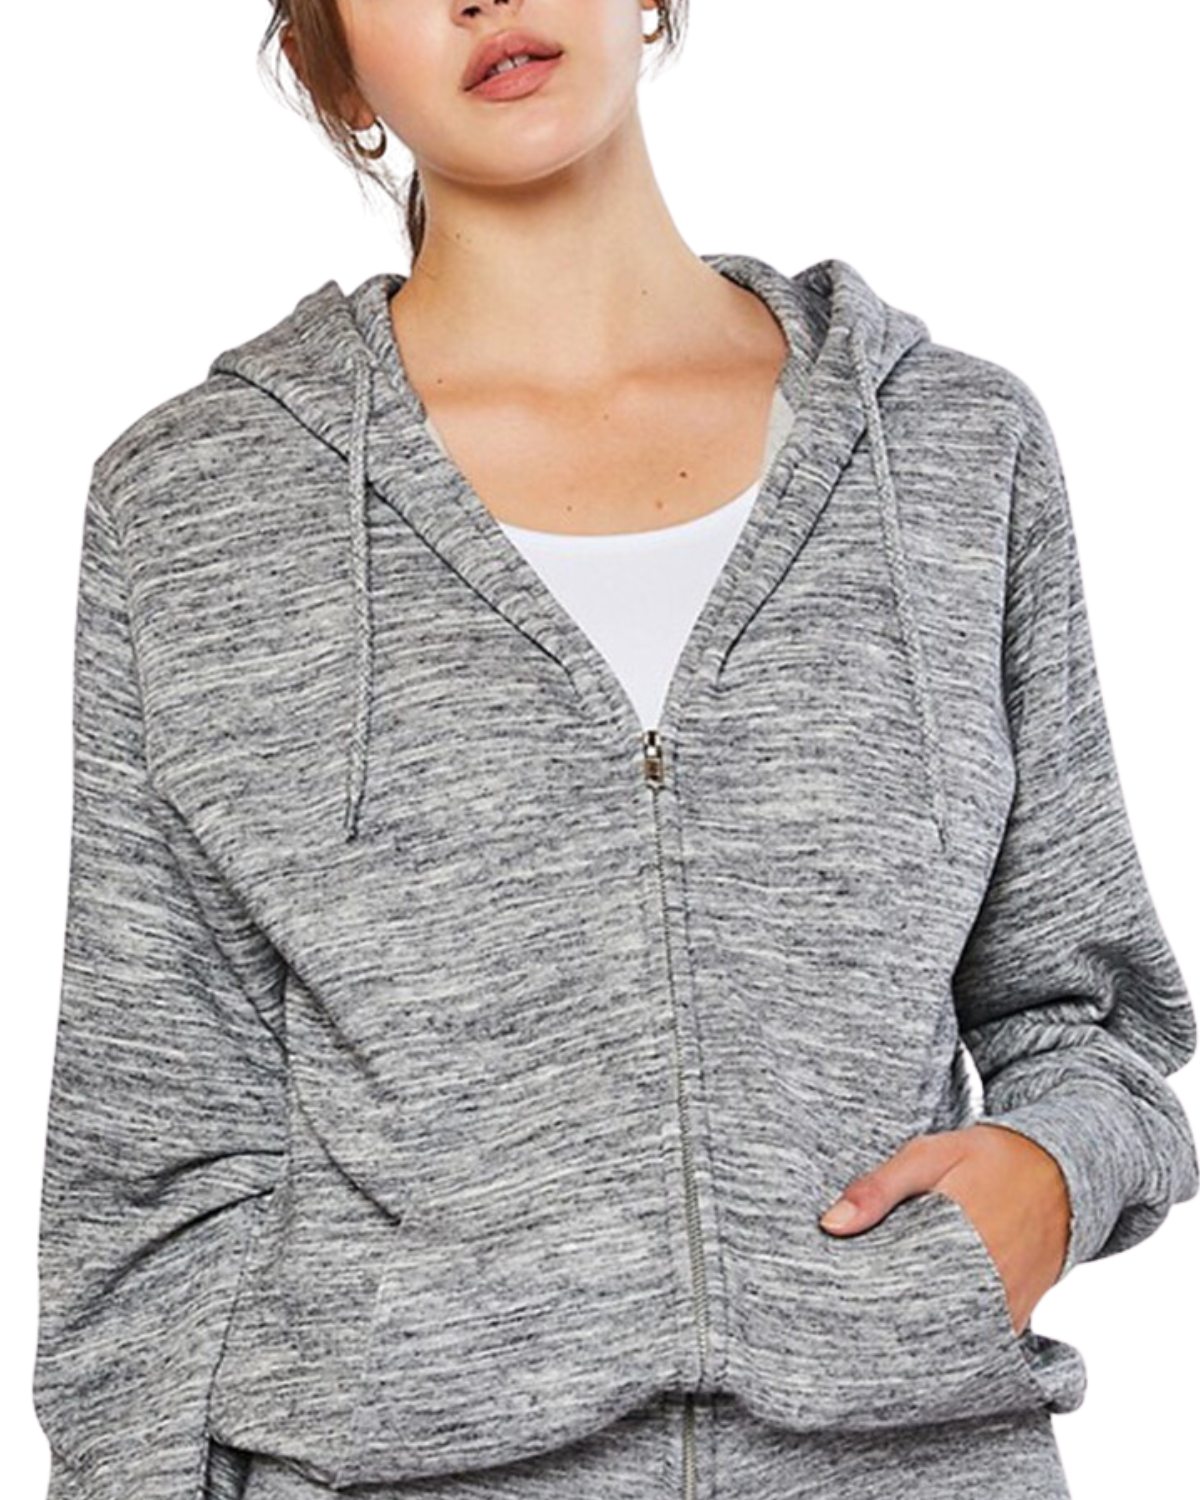 Model on a white backdrop wearing a women's oversized fleece zip up hooded sweater in a solid marble grey